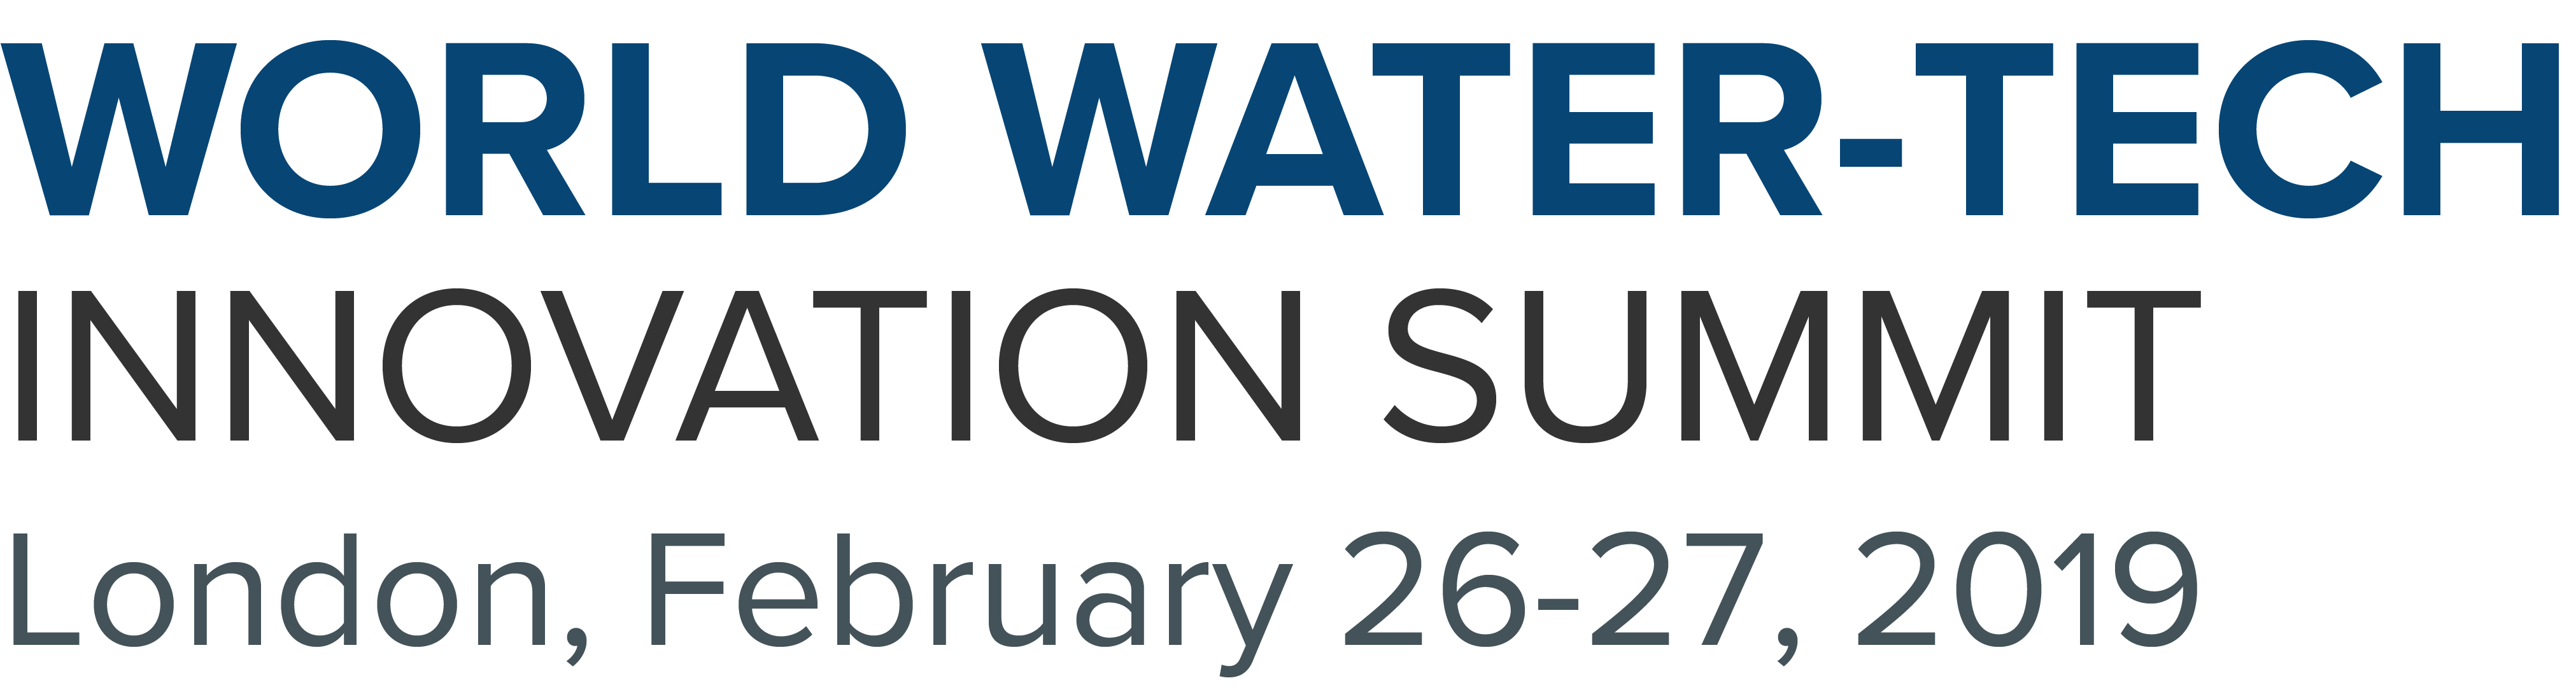 World Water-Tech Innovation Summit